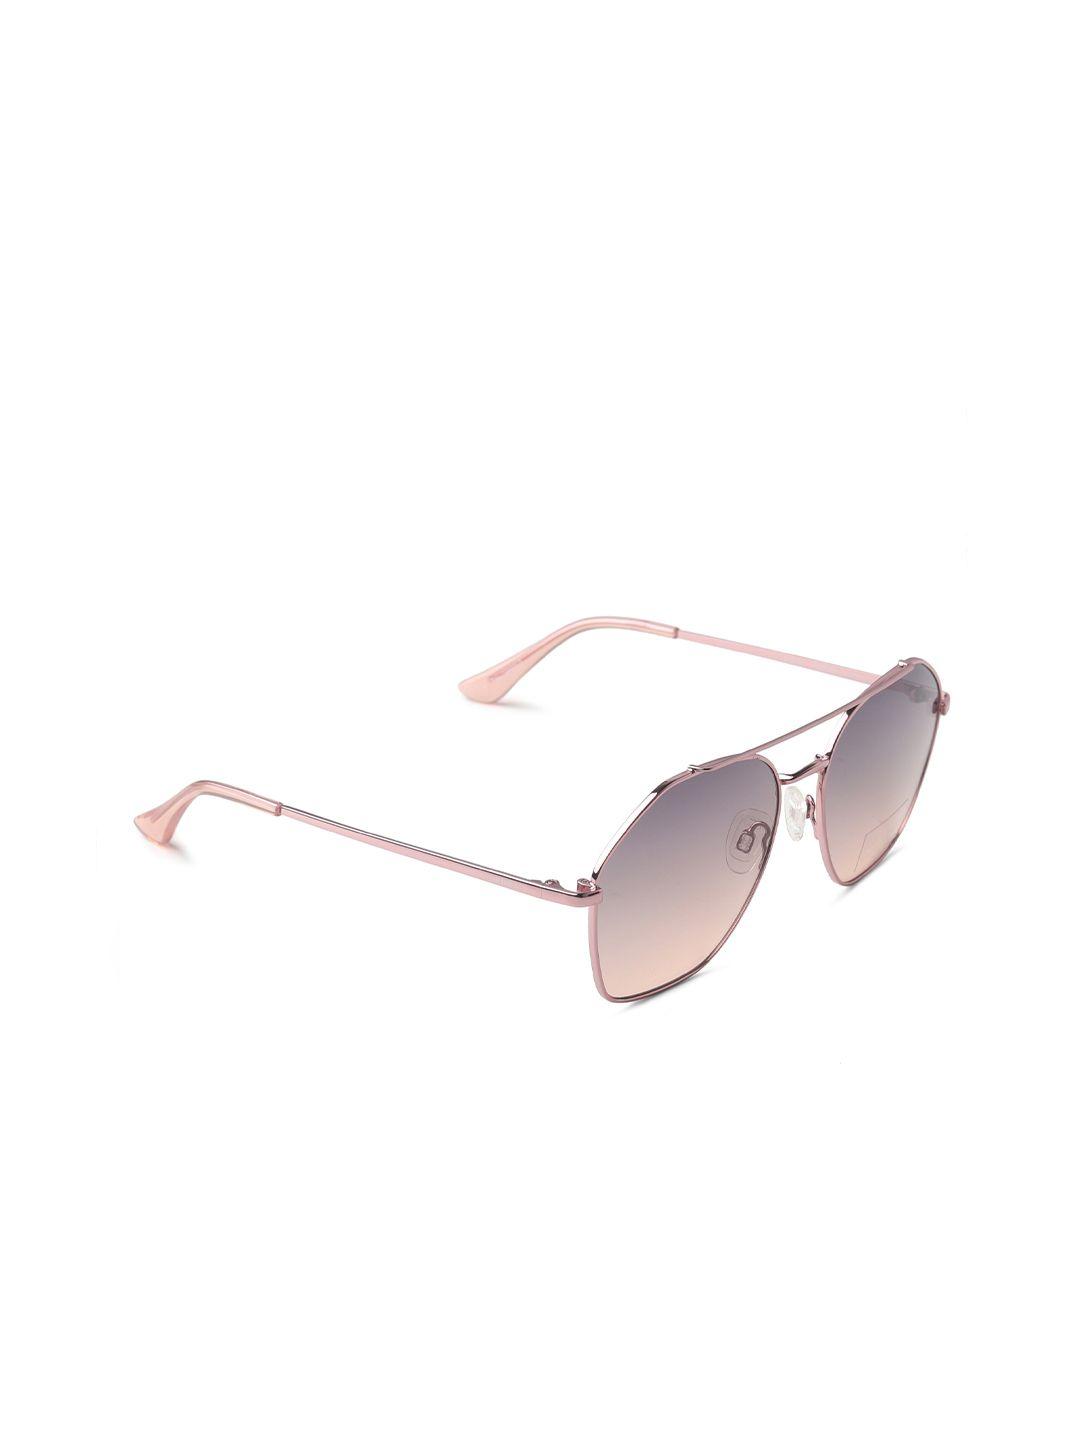 esprit-women-pink-lens-&-rose-gold-toned-uv-protected-aviator-sunglasses-et39098-56-515